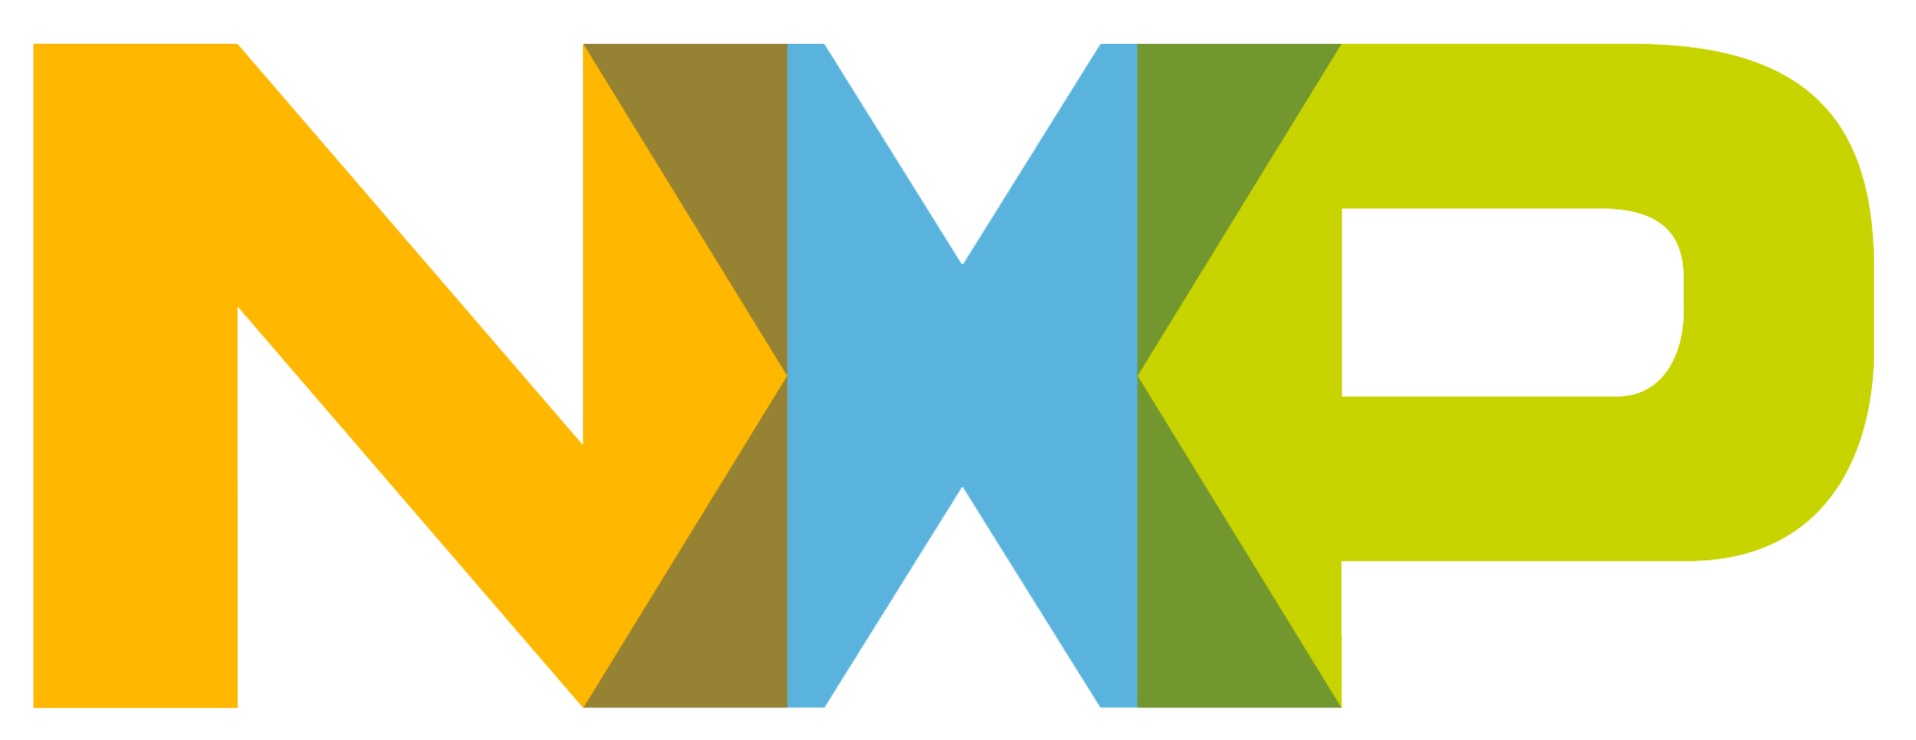 NXP_logo_RGB_web-transp.png